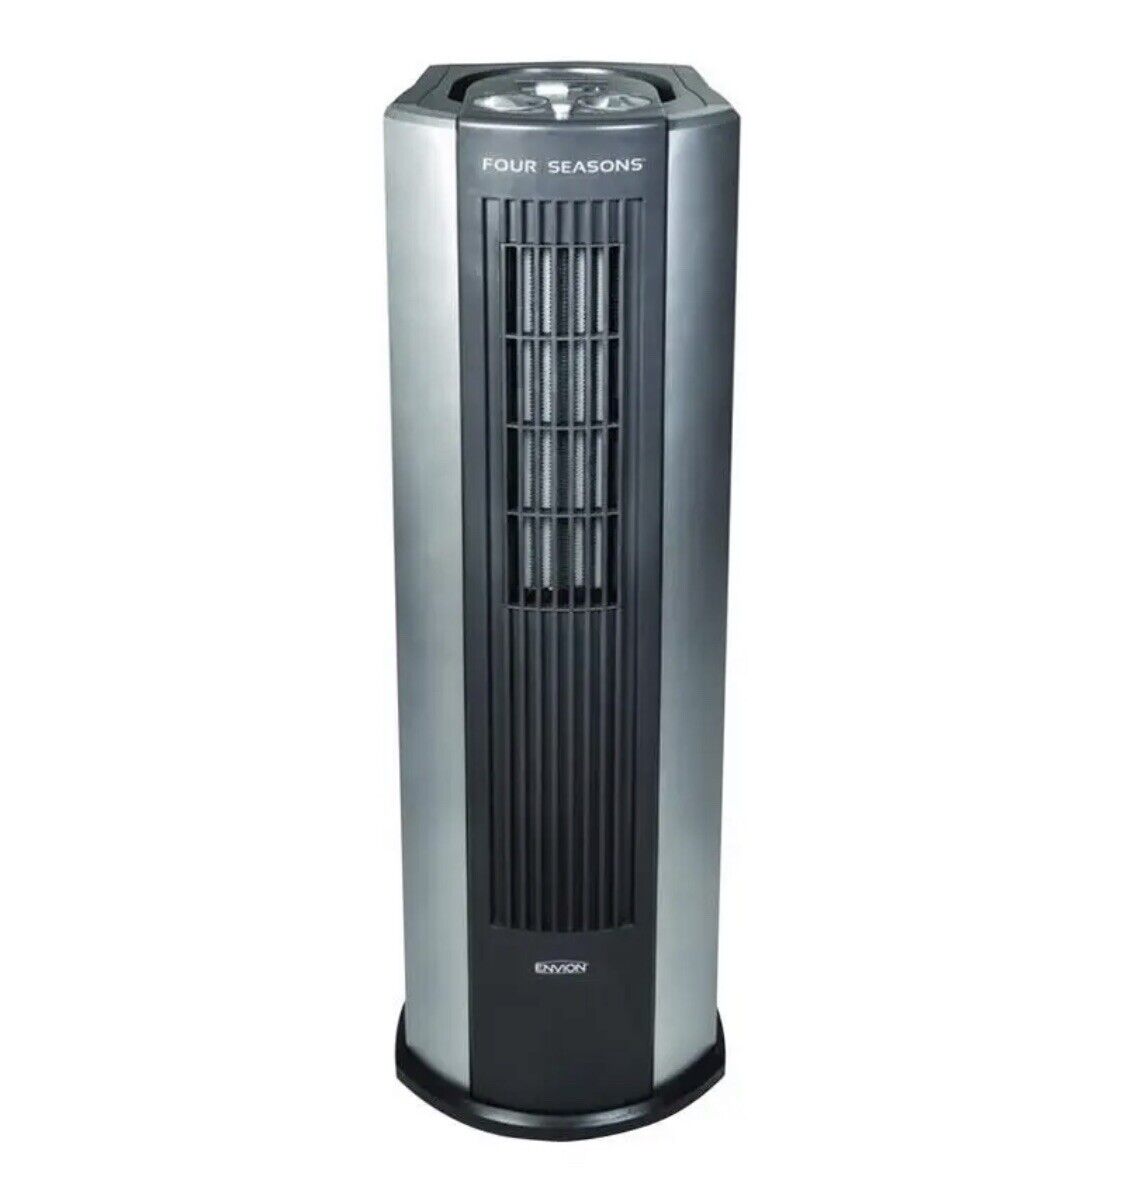 Envion 49298 Four Seasons 4-in-1 Air Purifier Fan Heater and Humidifier